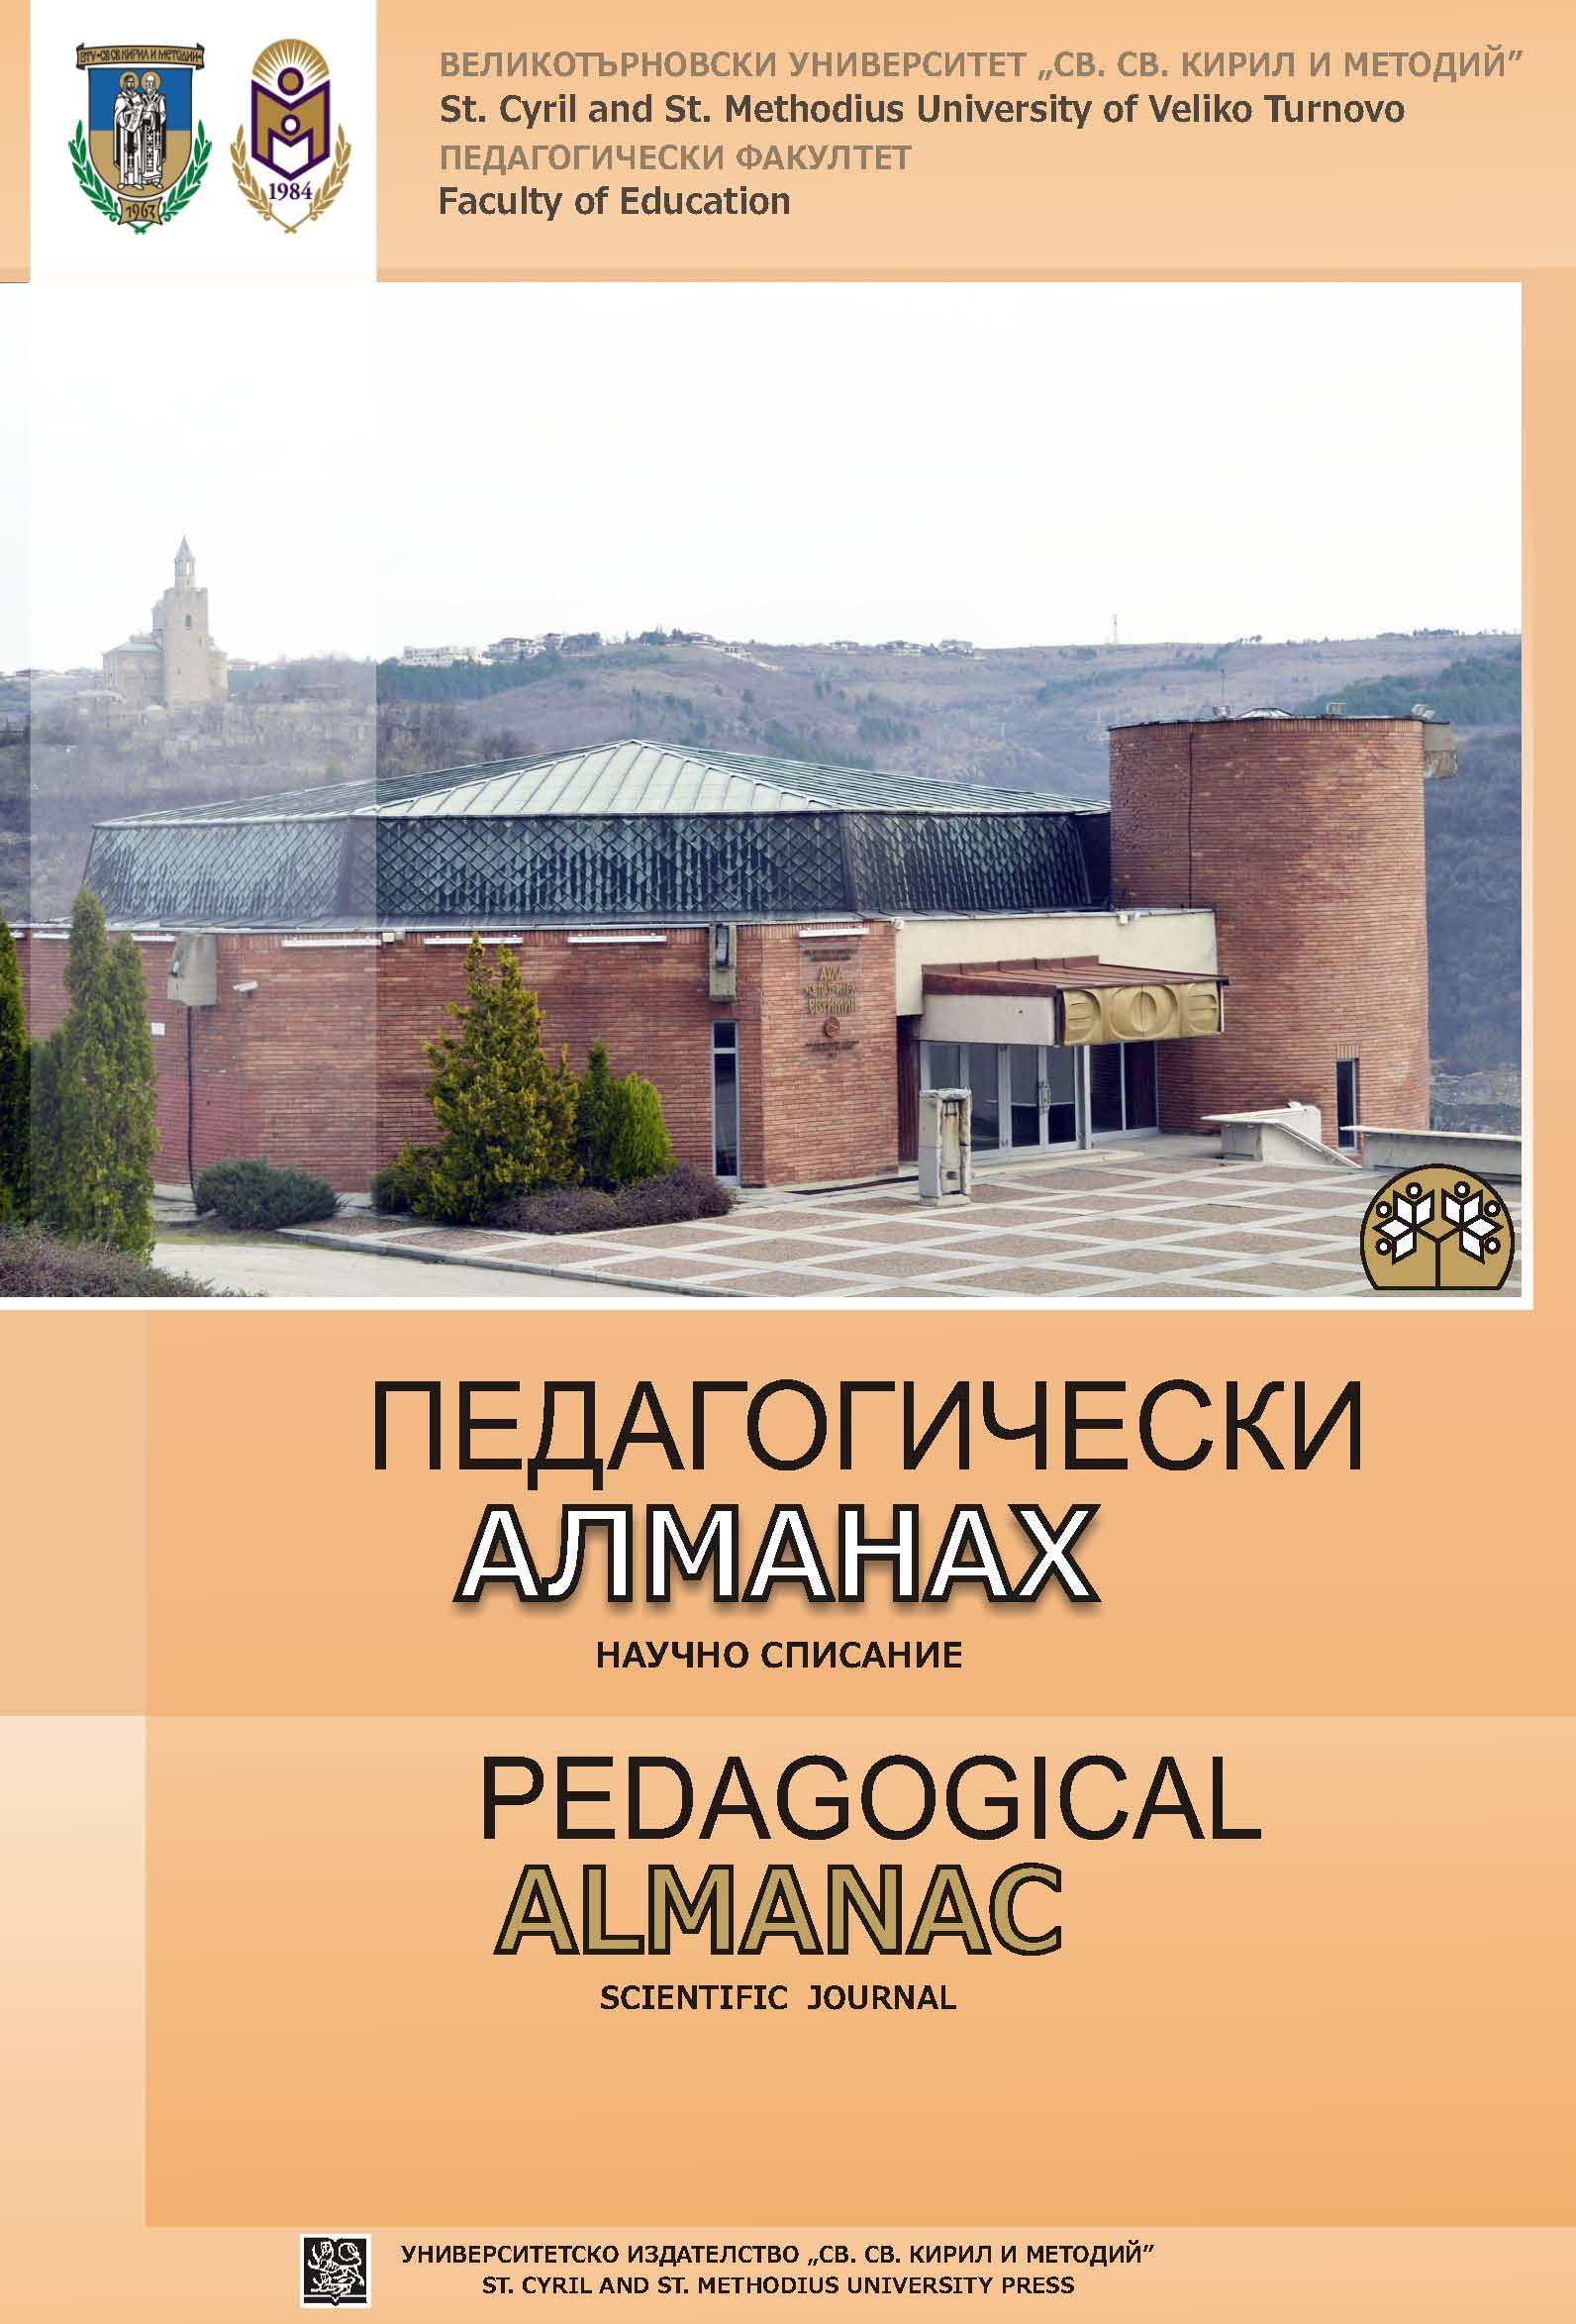 Assoc. Professor Margarita Kamenova for Academic Cooperation of Teachers and Students Cover Image